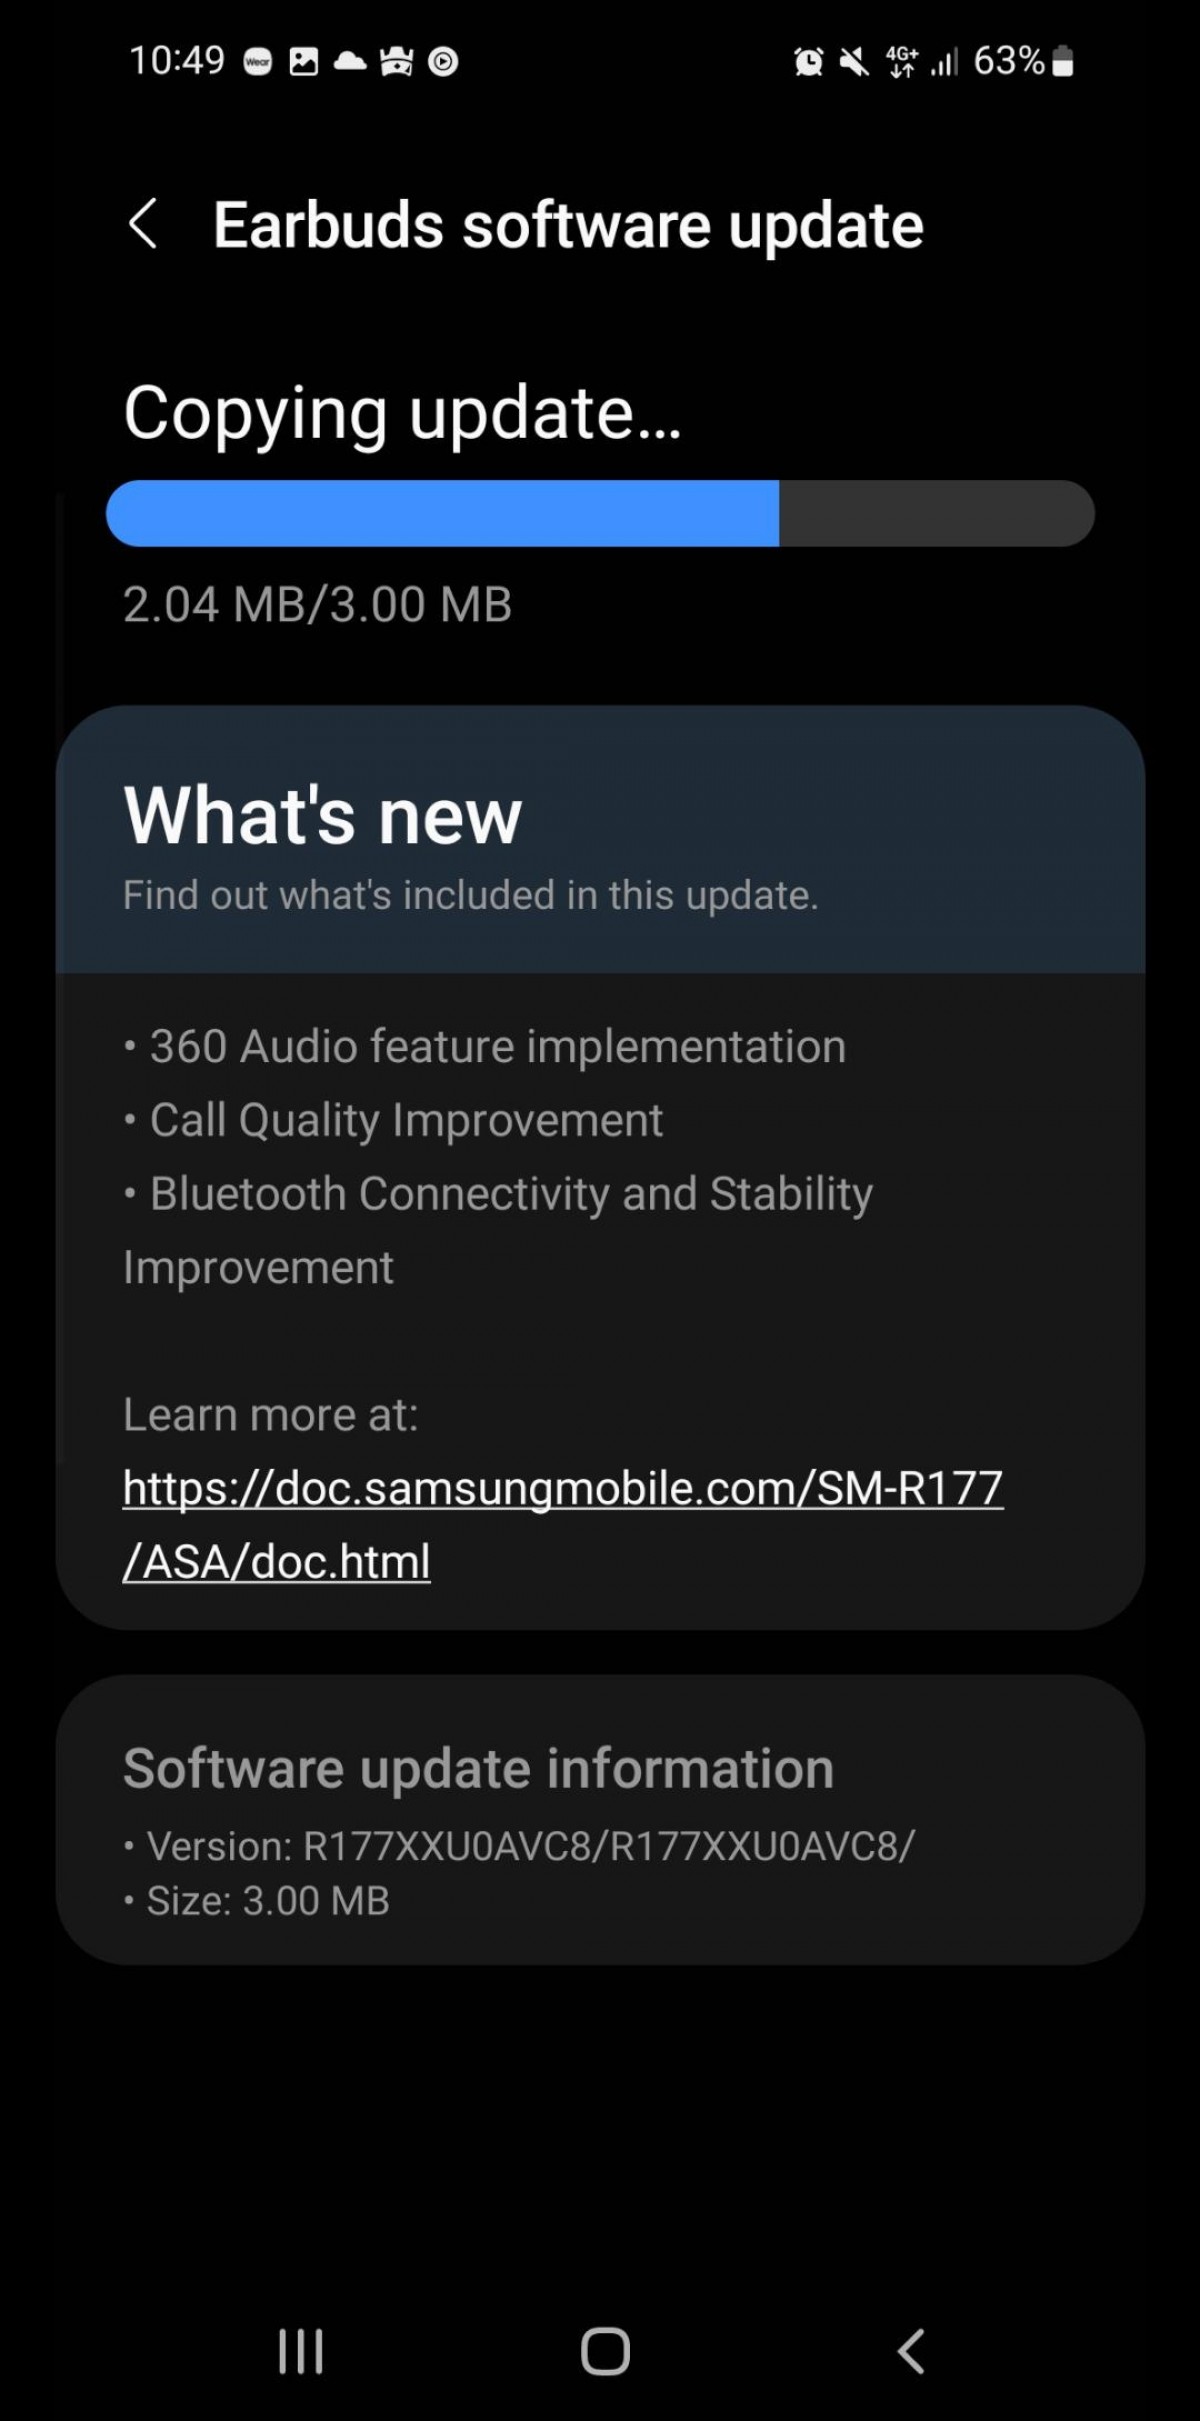 Samsung Galaxy Buds 2 get 360 audio in a new software update